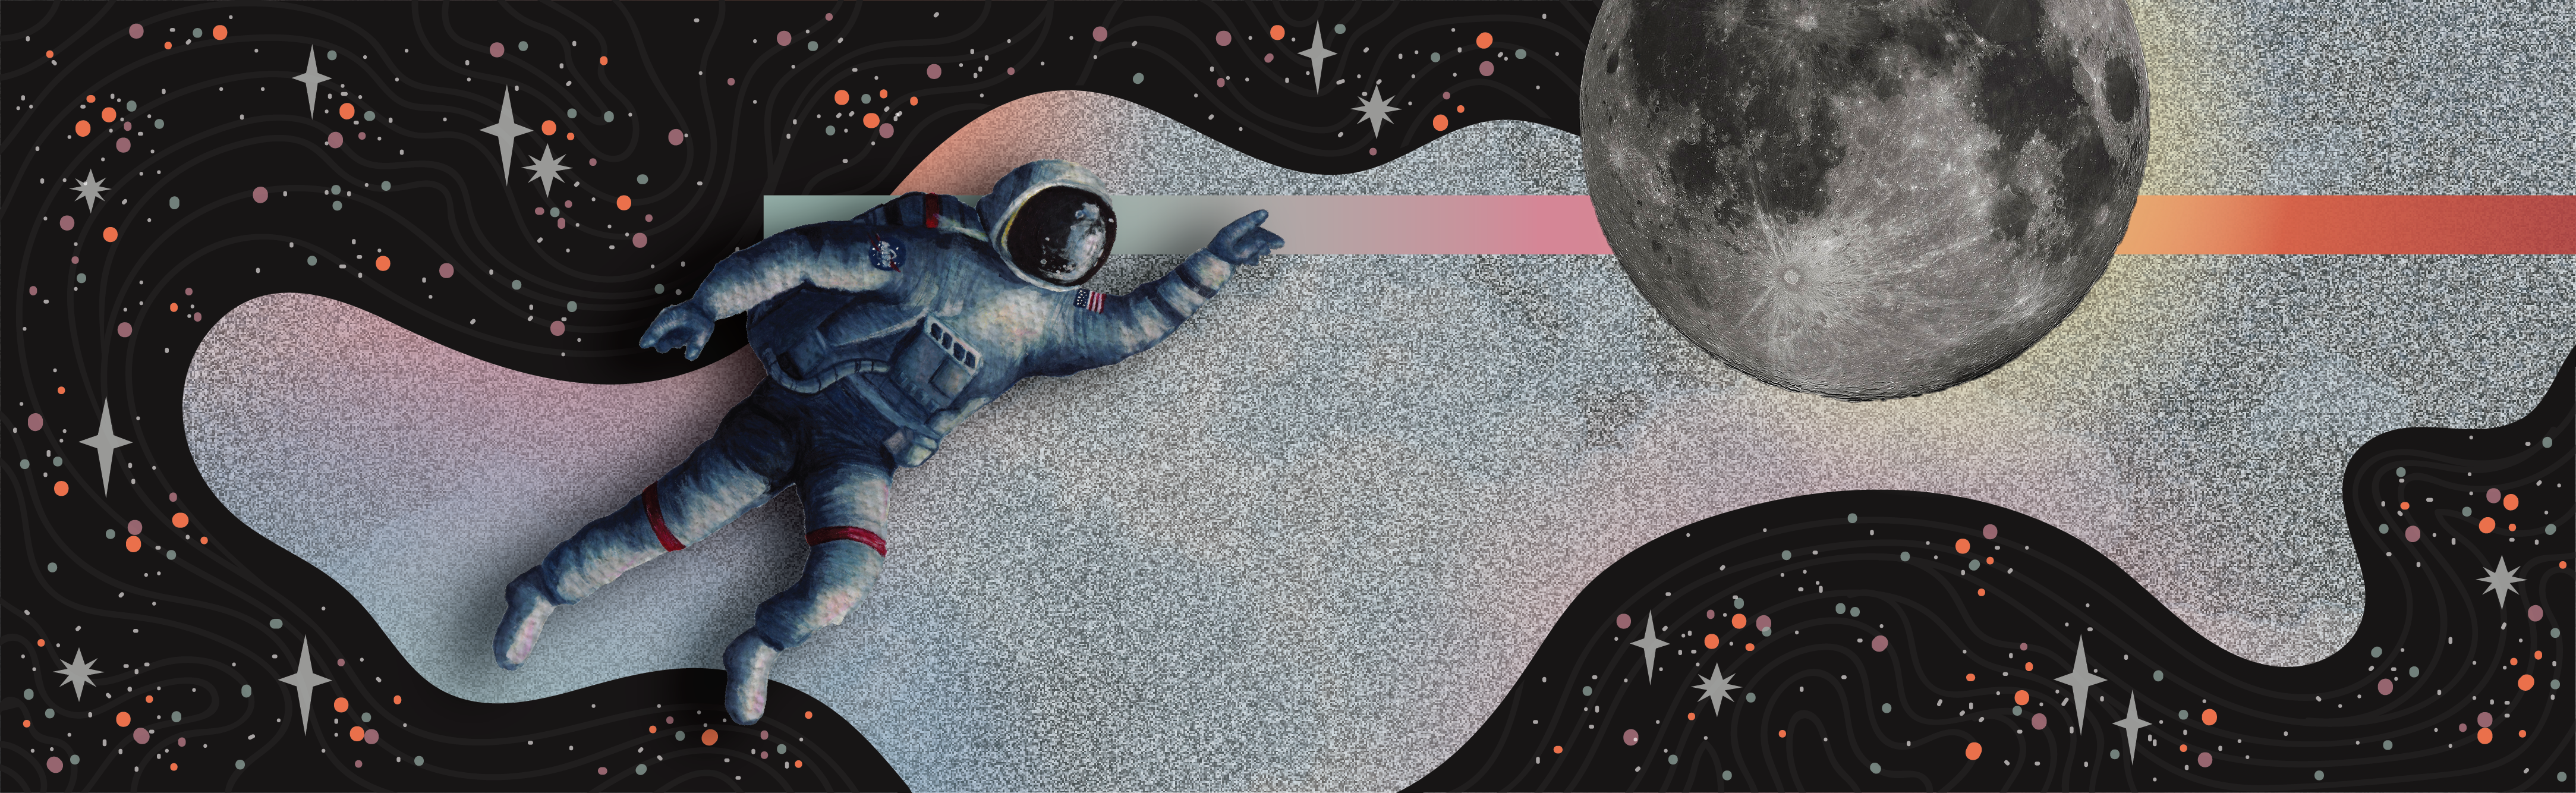 An astronaut reaches for the Moon